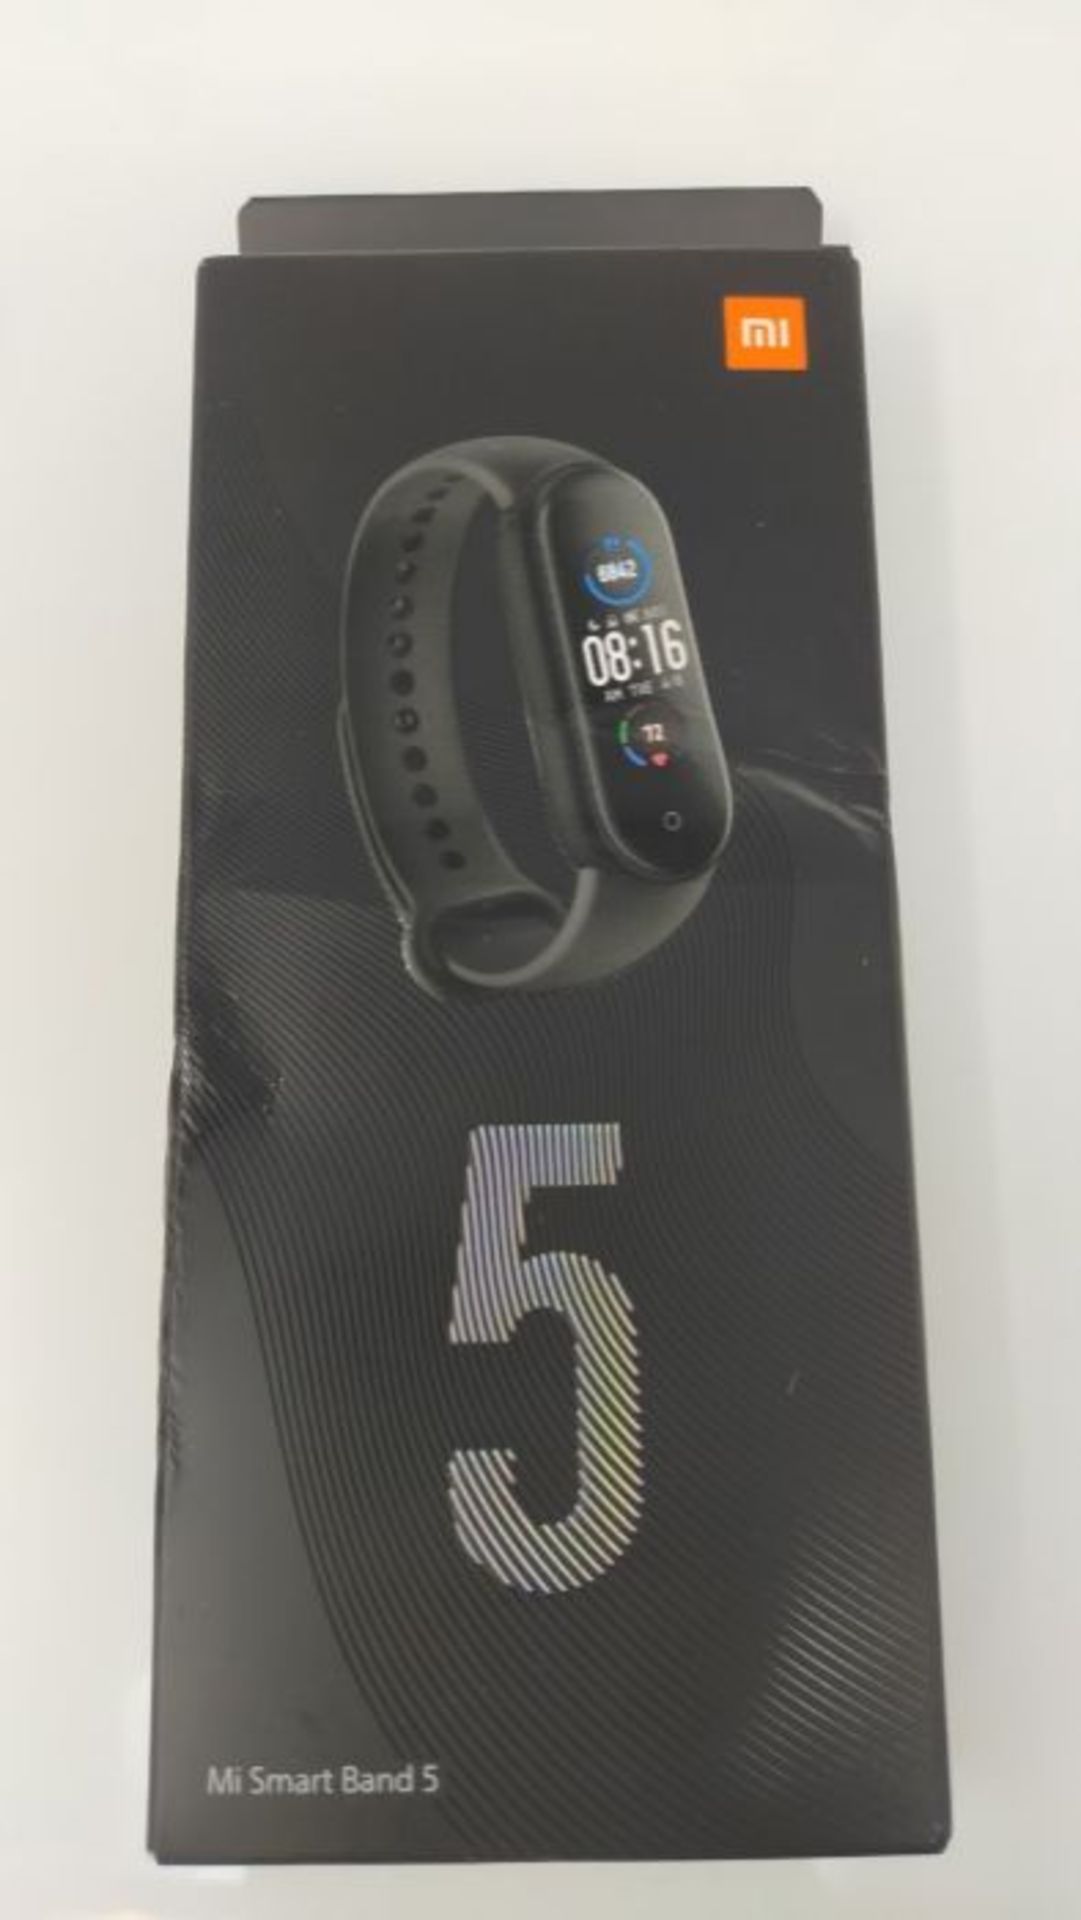 Xiaomi Mi Band 5 Smart Armband, Aktivit?ts Tracker, Fitness Tracker, 5ATM Wasserdicht - Image 2 of 3